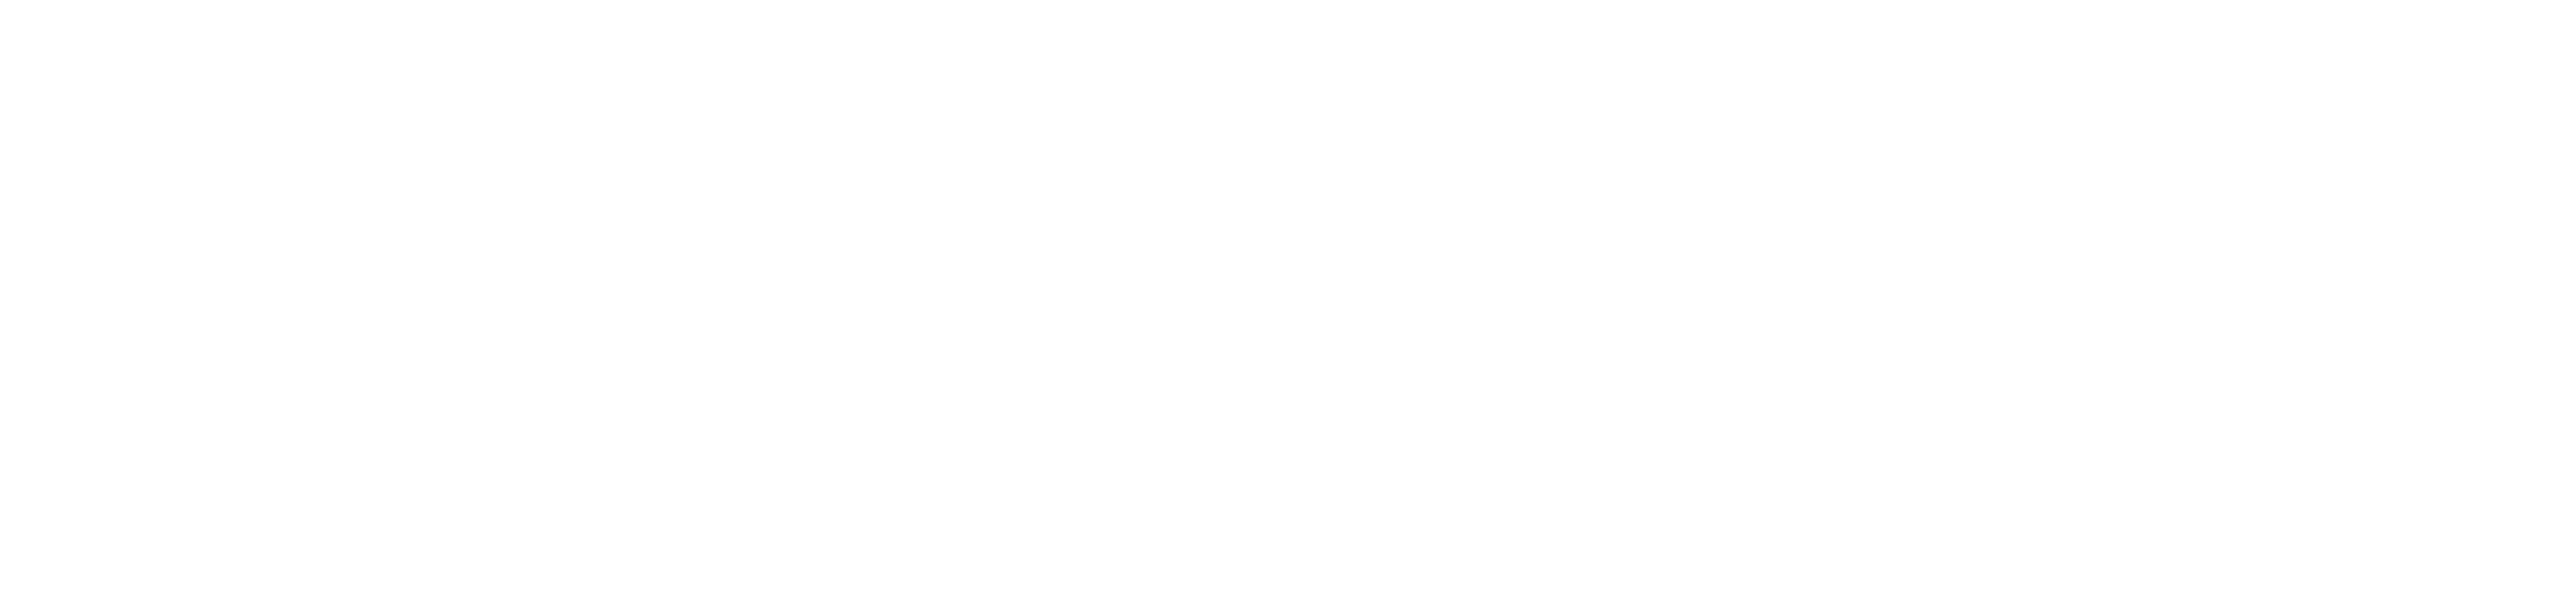 Black Windows Server Logo - CPS Background Information | Acuutech Cloud Solutions